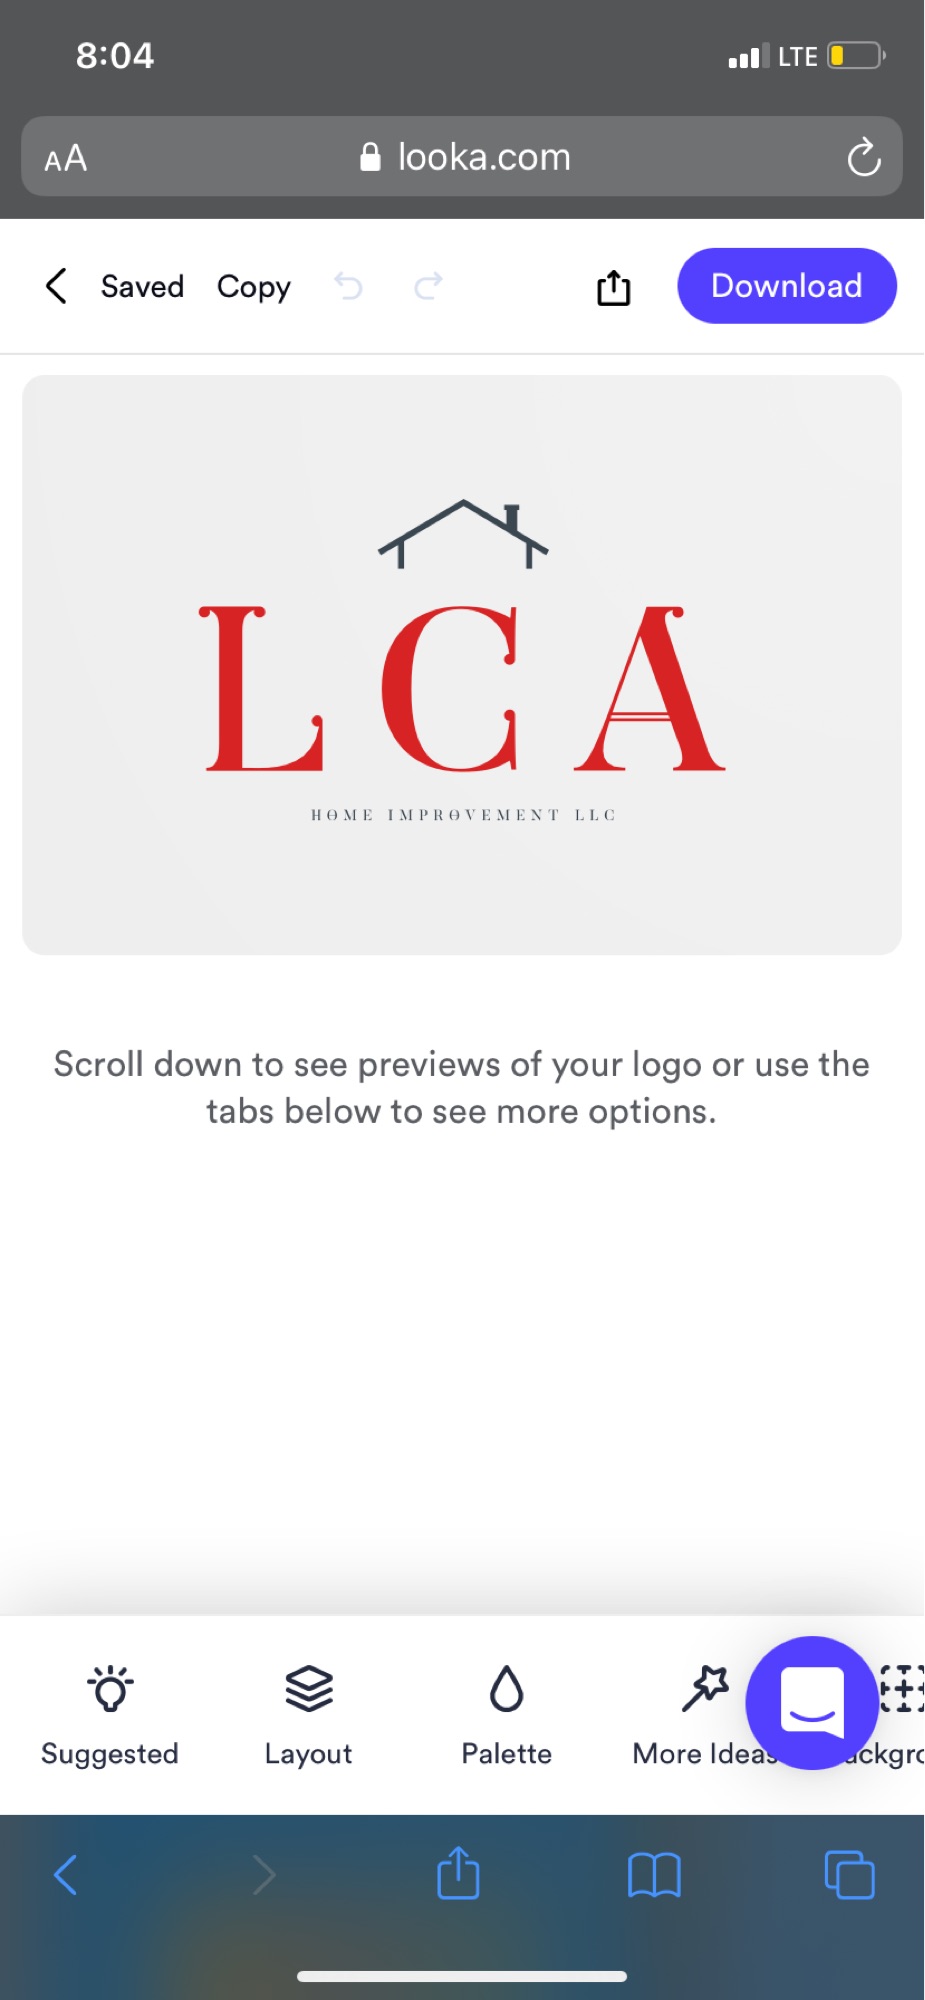 LCA Home Improvement Logo